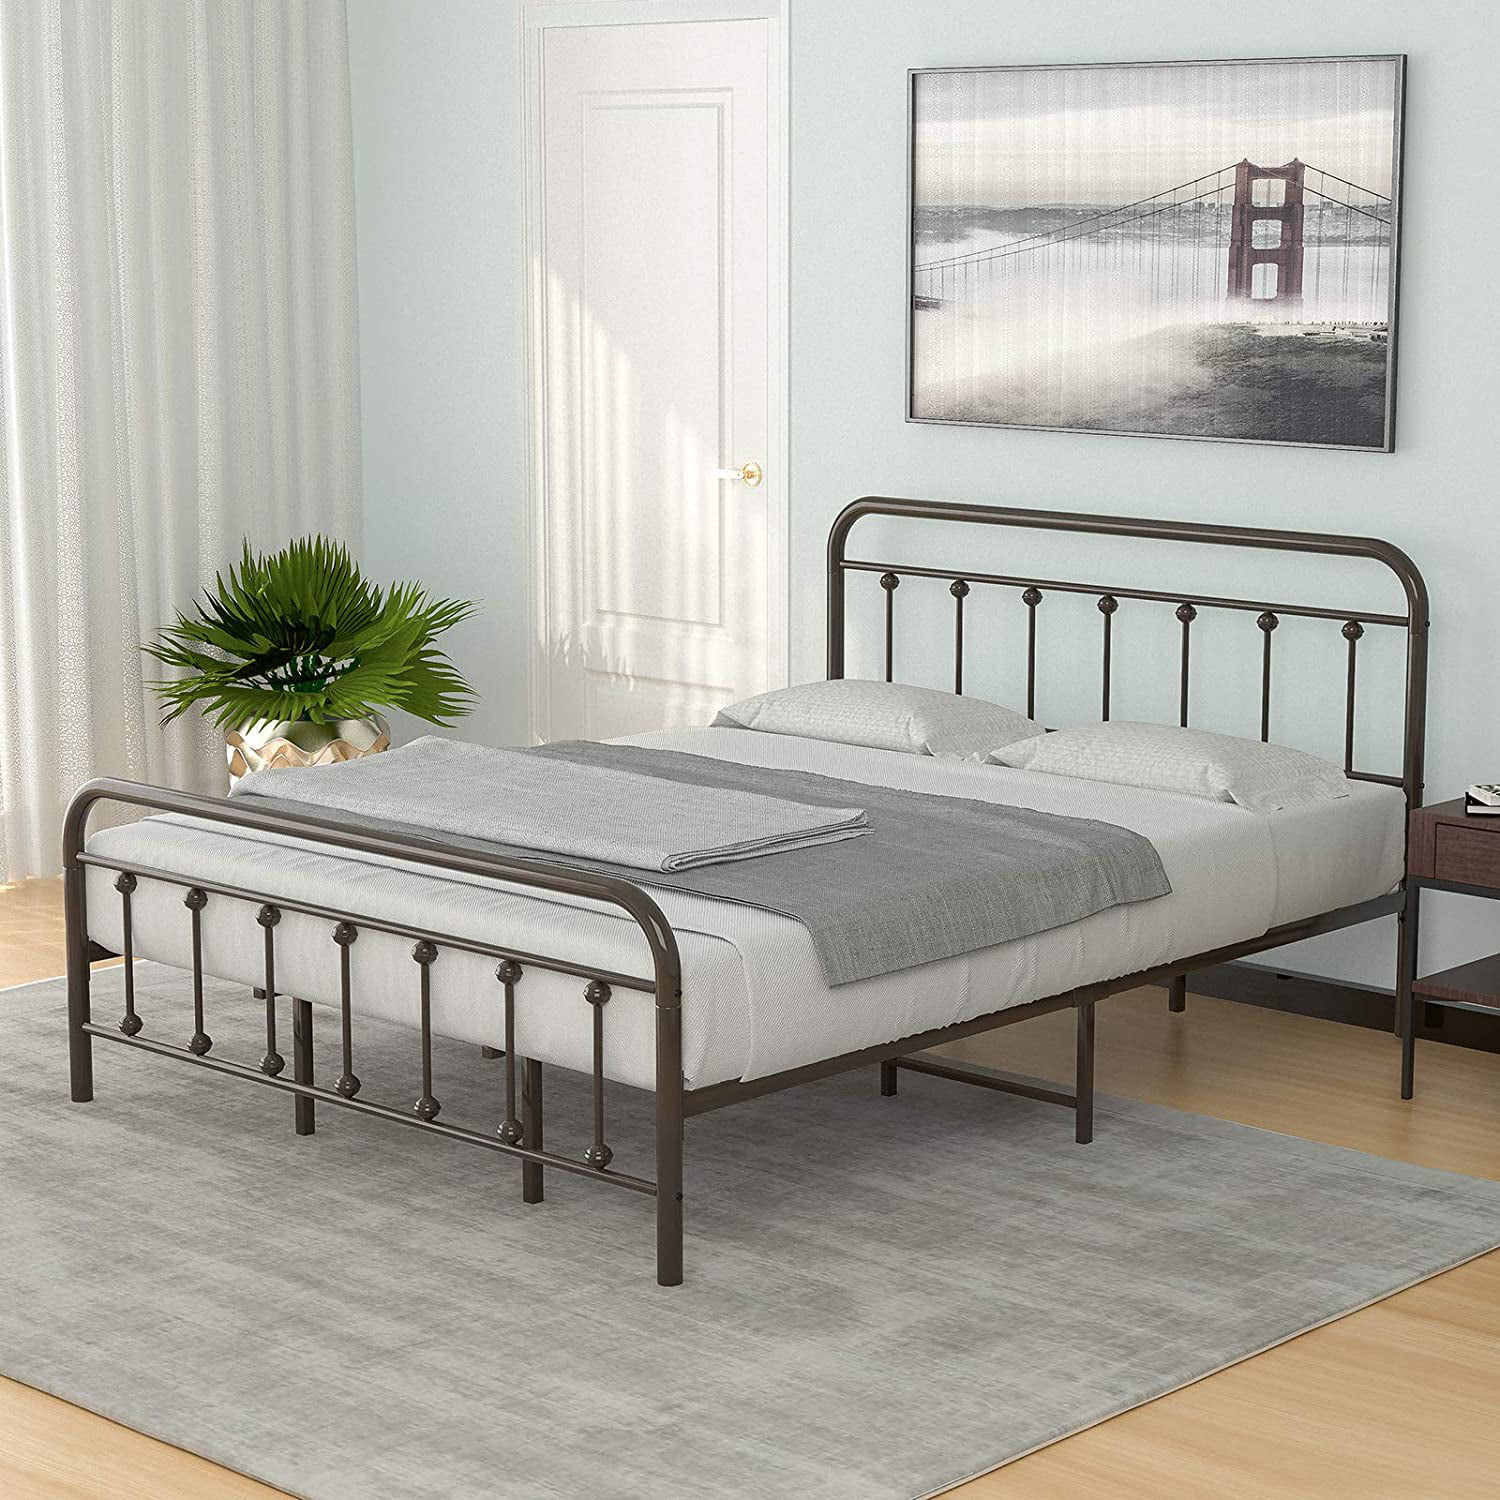 Mecor King Size Metal Platform Bed, Basic Metal Bed Frame King